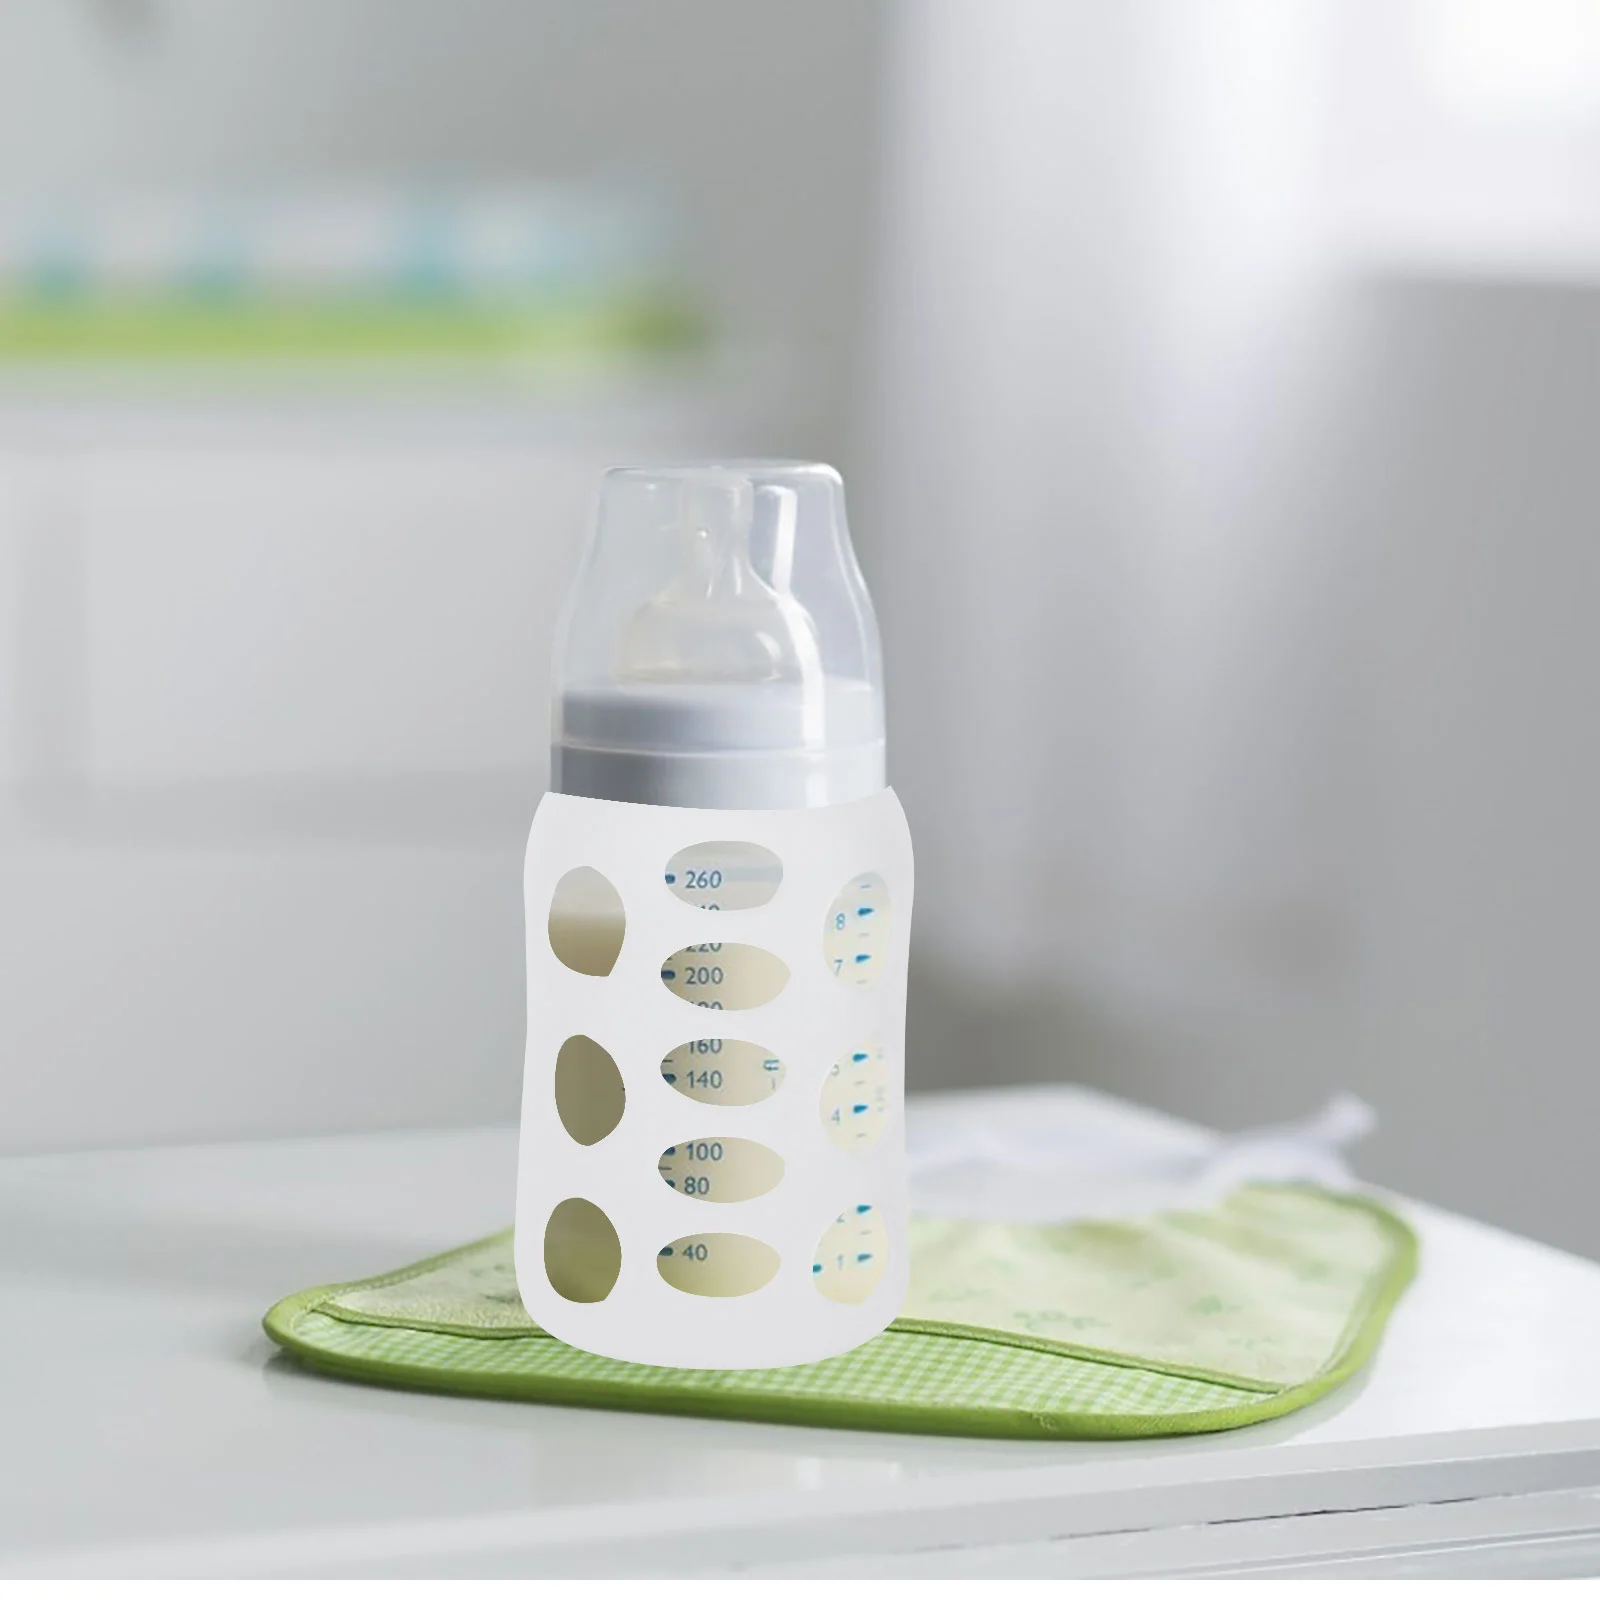 https://ae01.alicdn.com/kf/S70f69607030b4809b03a8901e501c298r/Silicone-Bottle-Sleeve-Feeding-Bottle-Cover-Anti-Infant-Bottle-Silicone-Covers-Protector-for-Glass-Water-Bottles.jpg